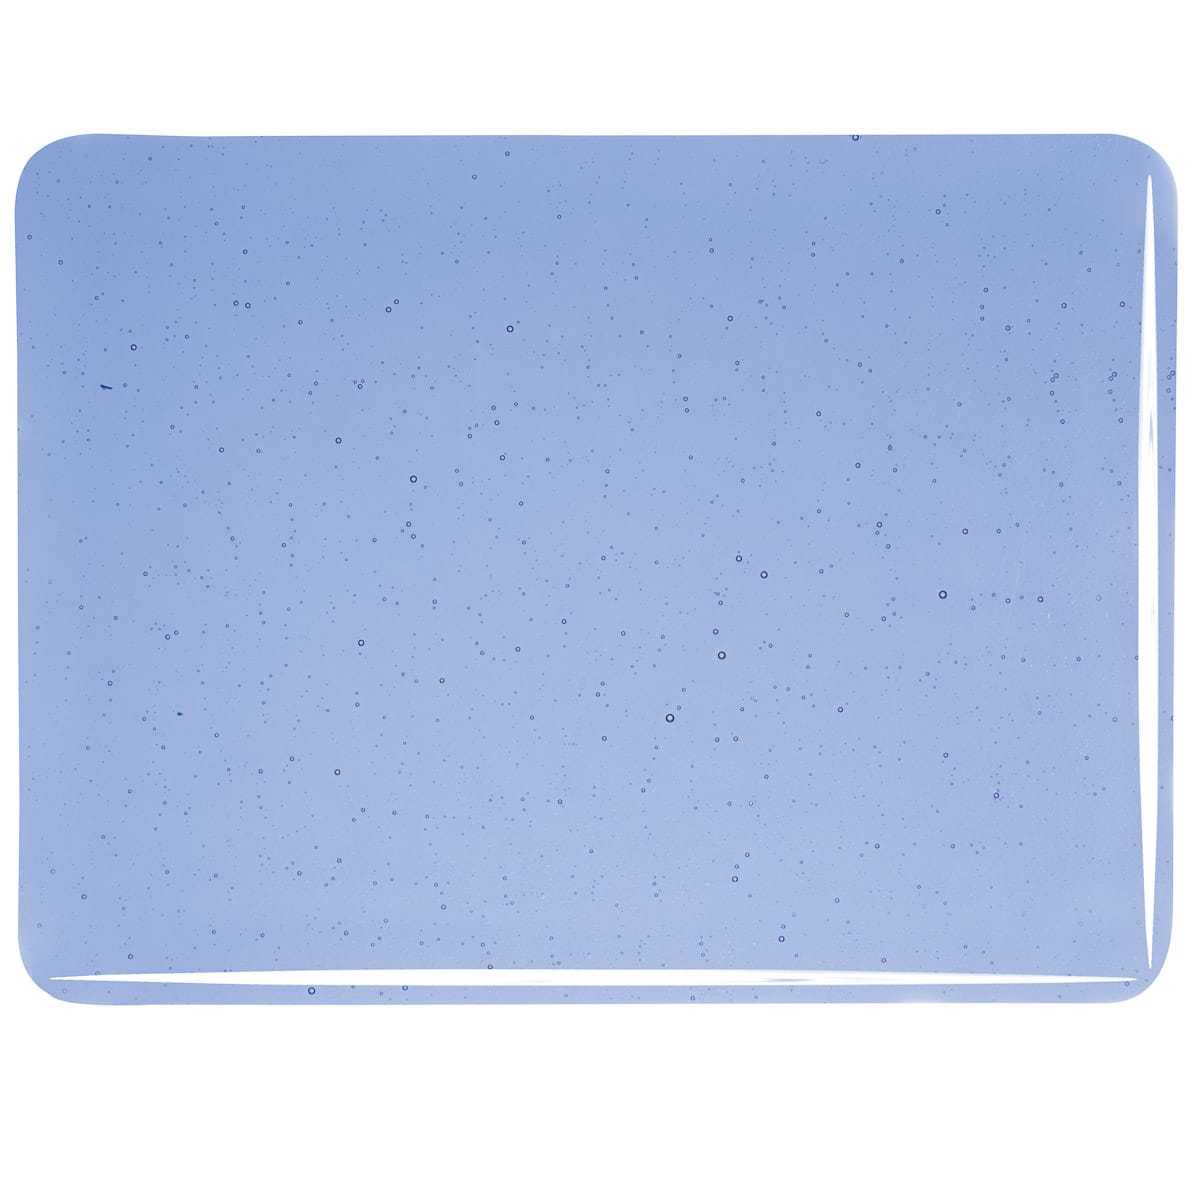 001414 Light Sky Blue transparent sheet glass swatch